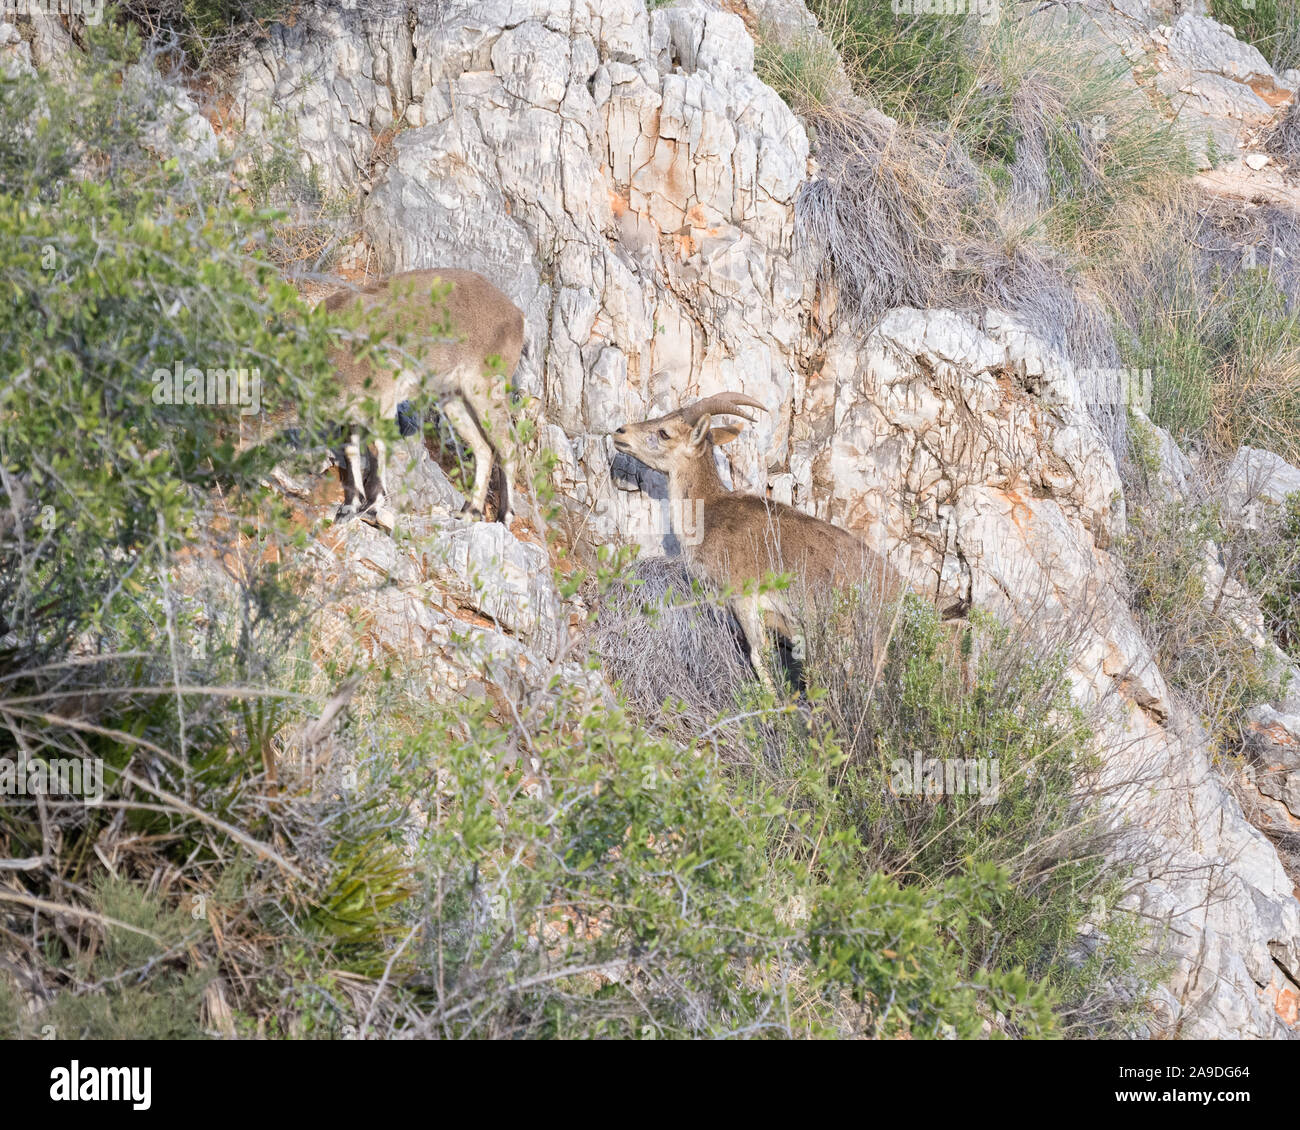 Two female wild Iberian Ibex browsing on scrub on a steep limestone cliff face Stock Photo